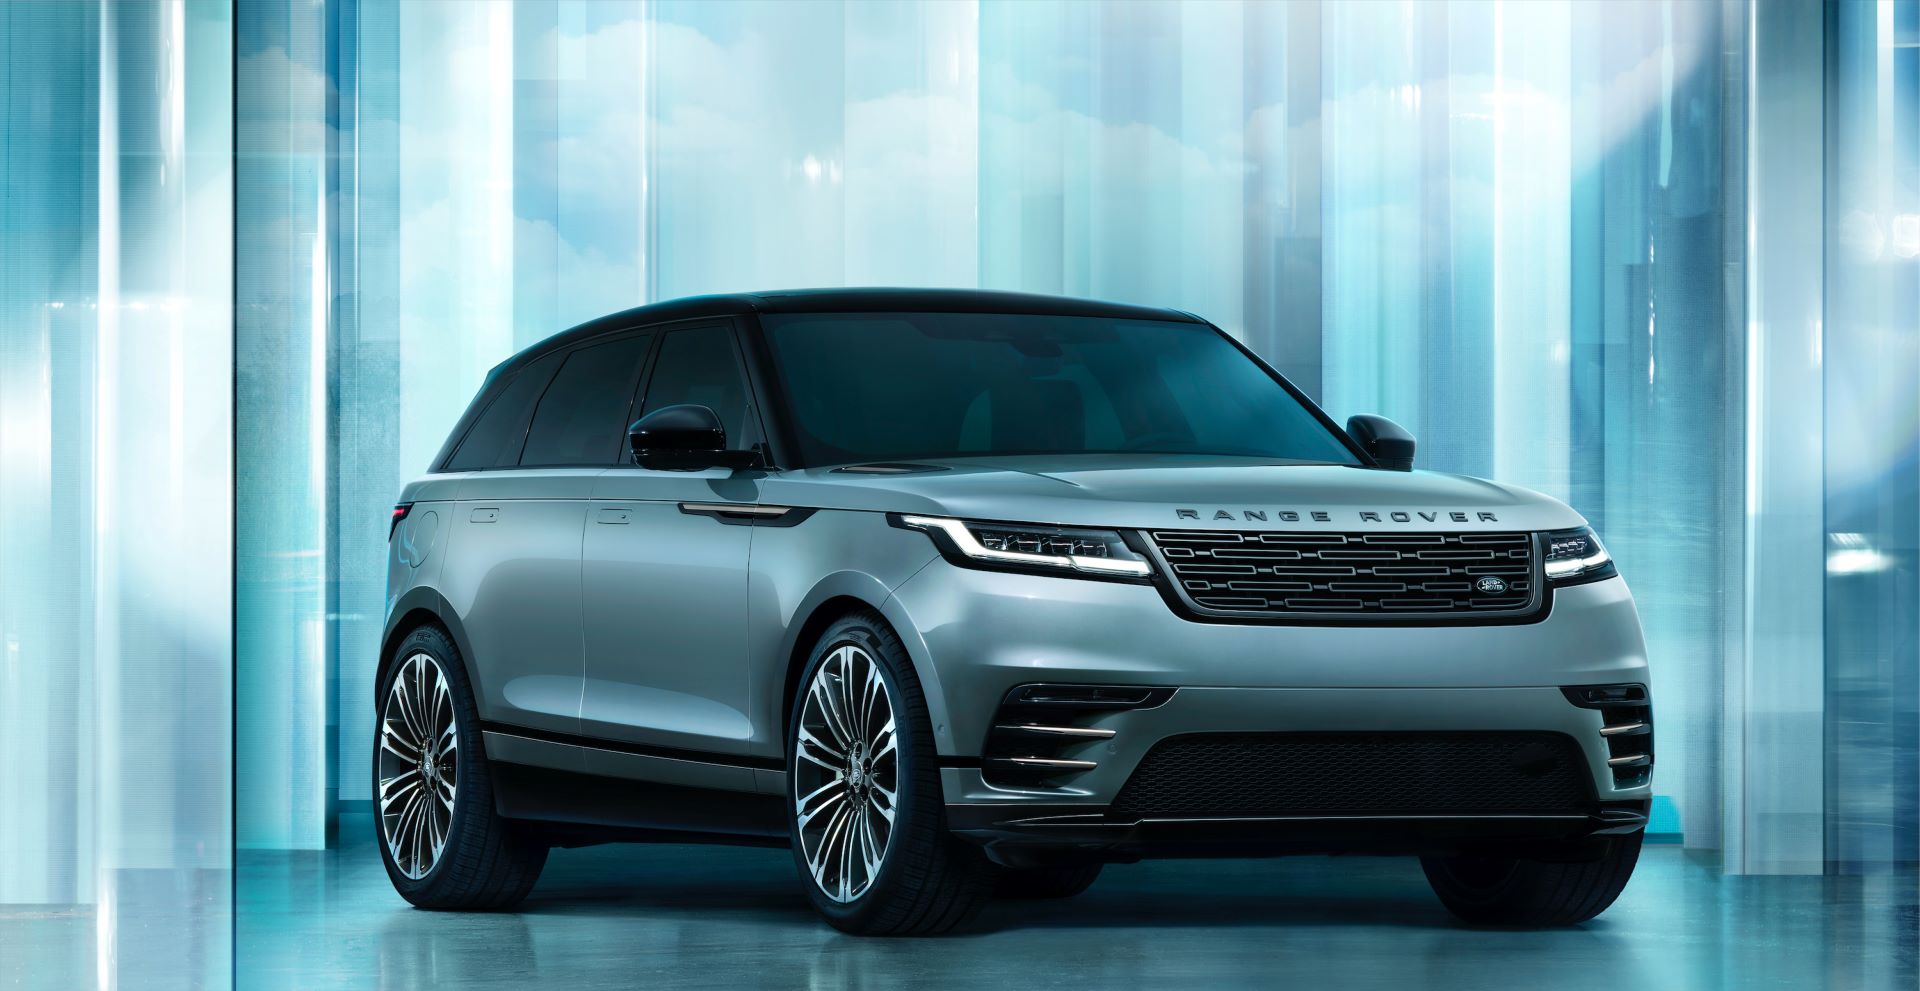 Range Rover Velar: Confidence-inspiring technology enhances every drive